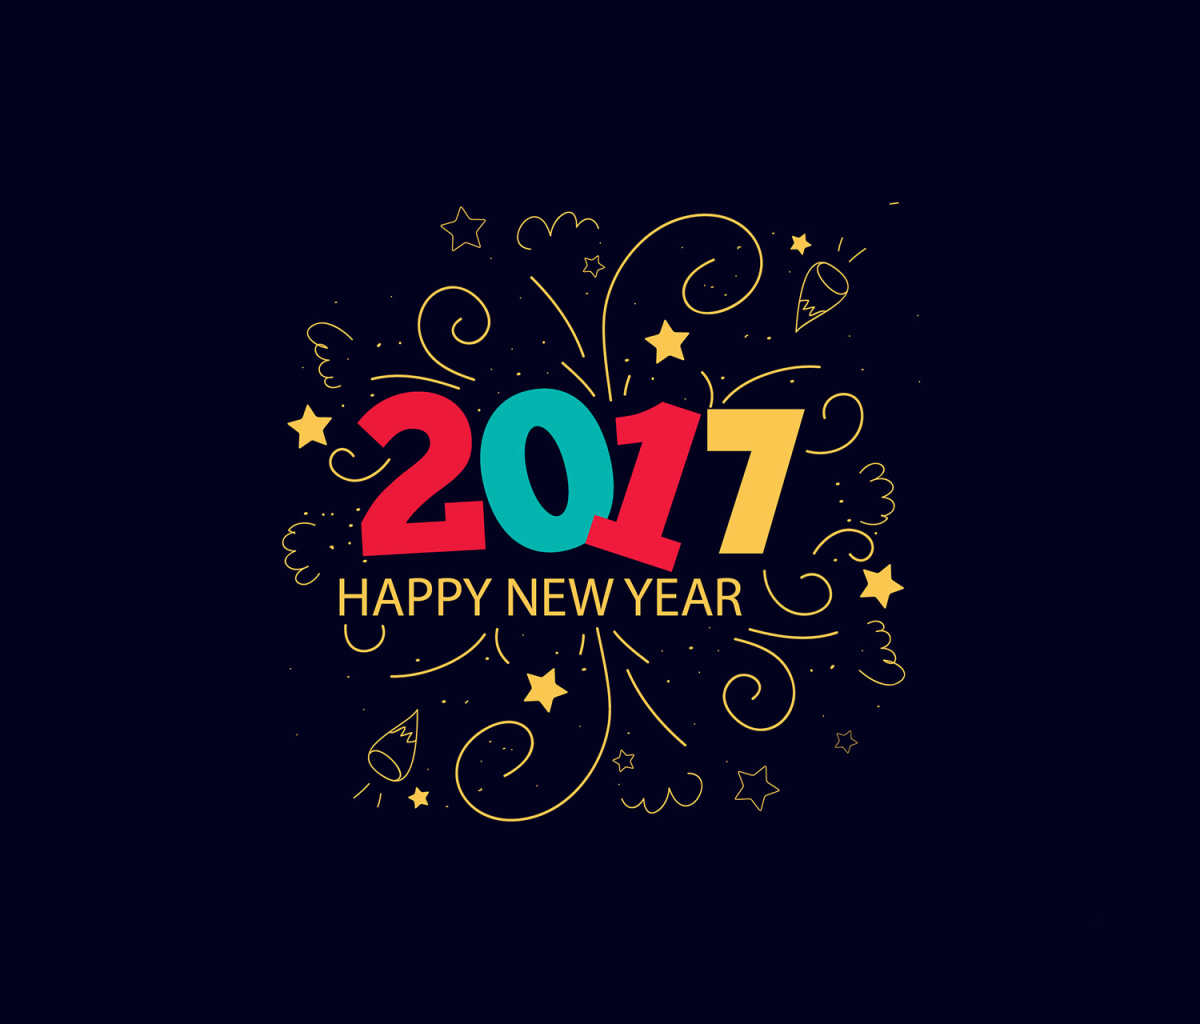 New Year 2017 wallpaper 1200x1024